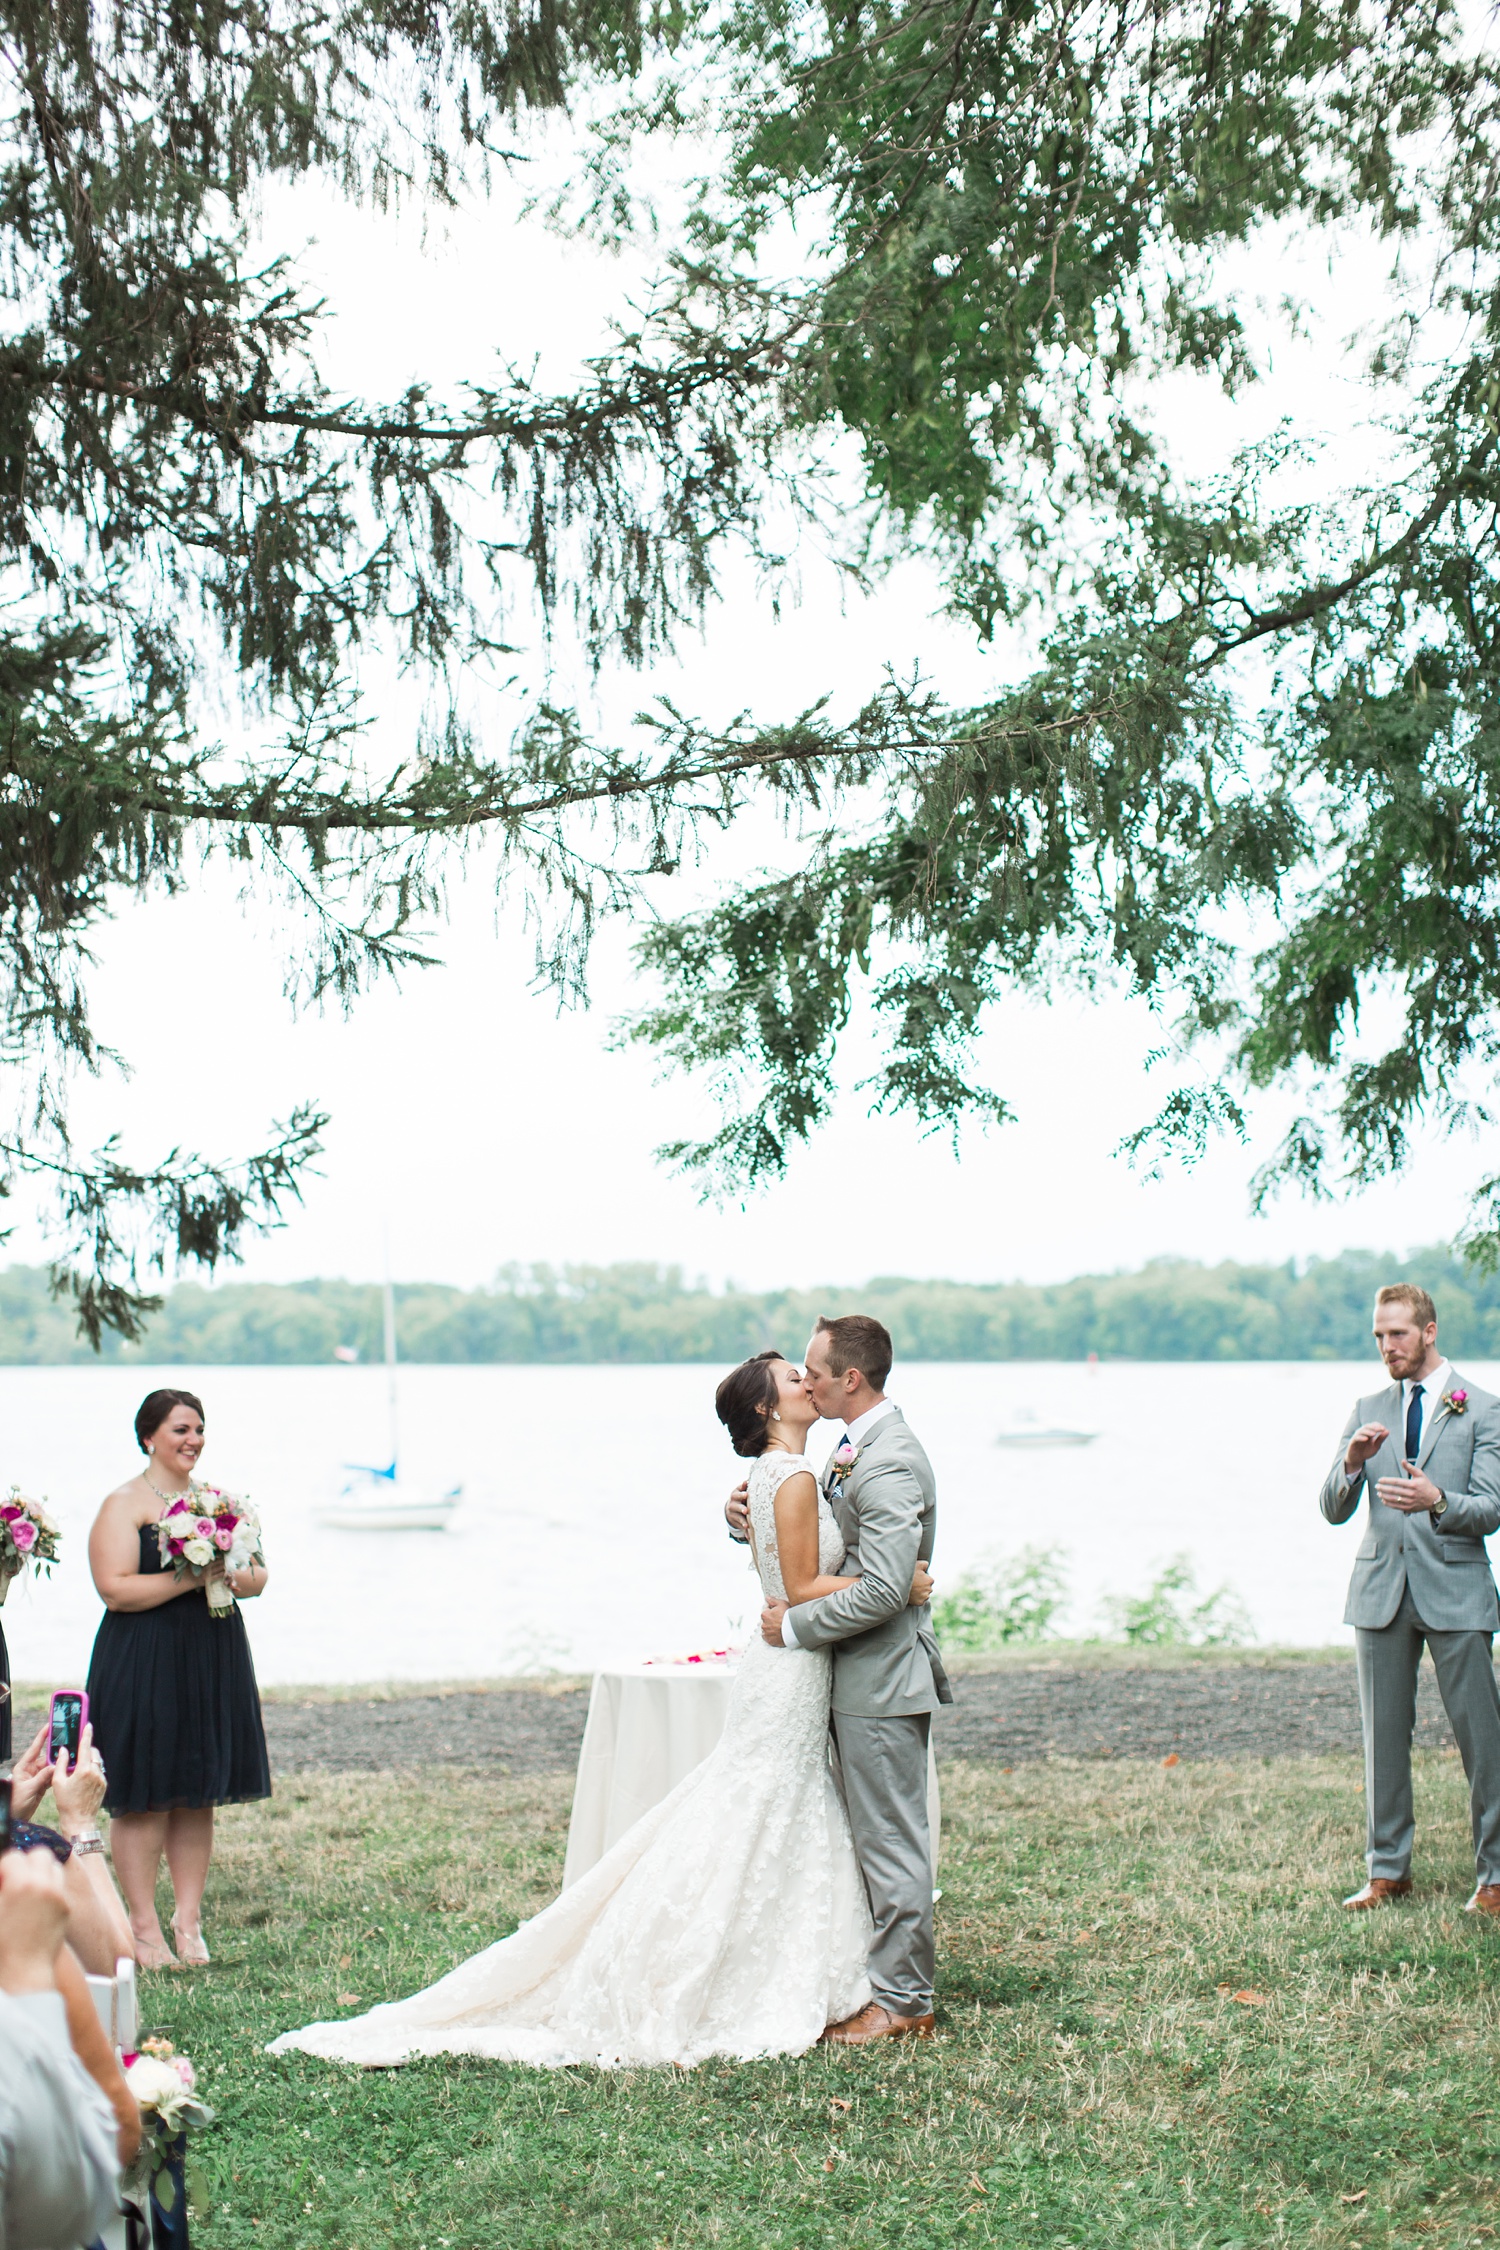 Glen Foerd Mansion Wedding Photography | Romantic Summer Garden Wedding | Nicole and Jason